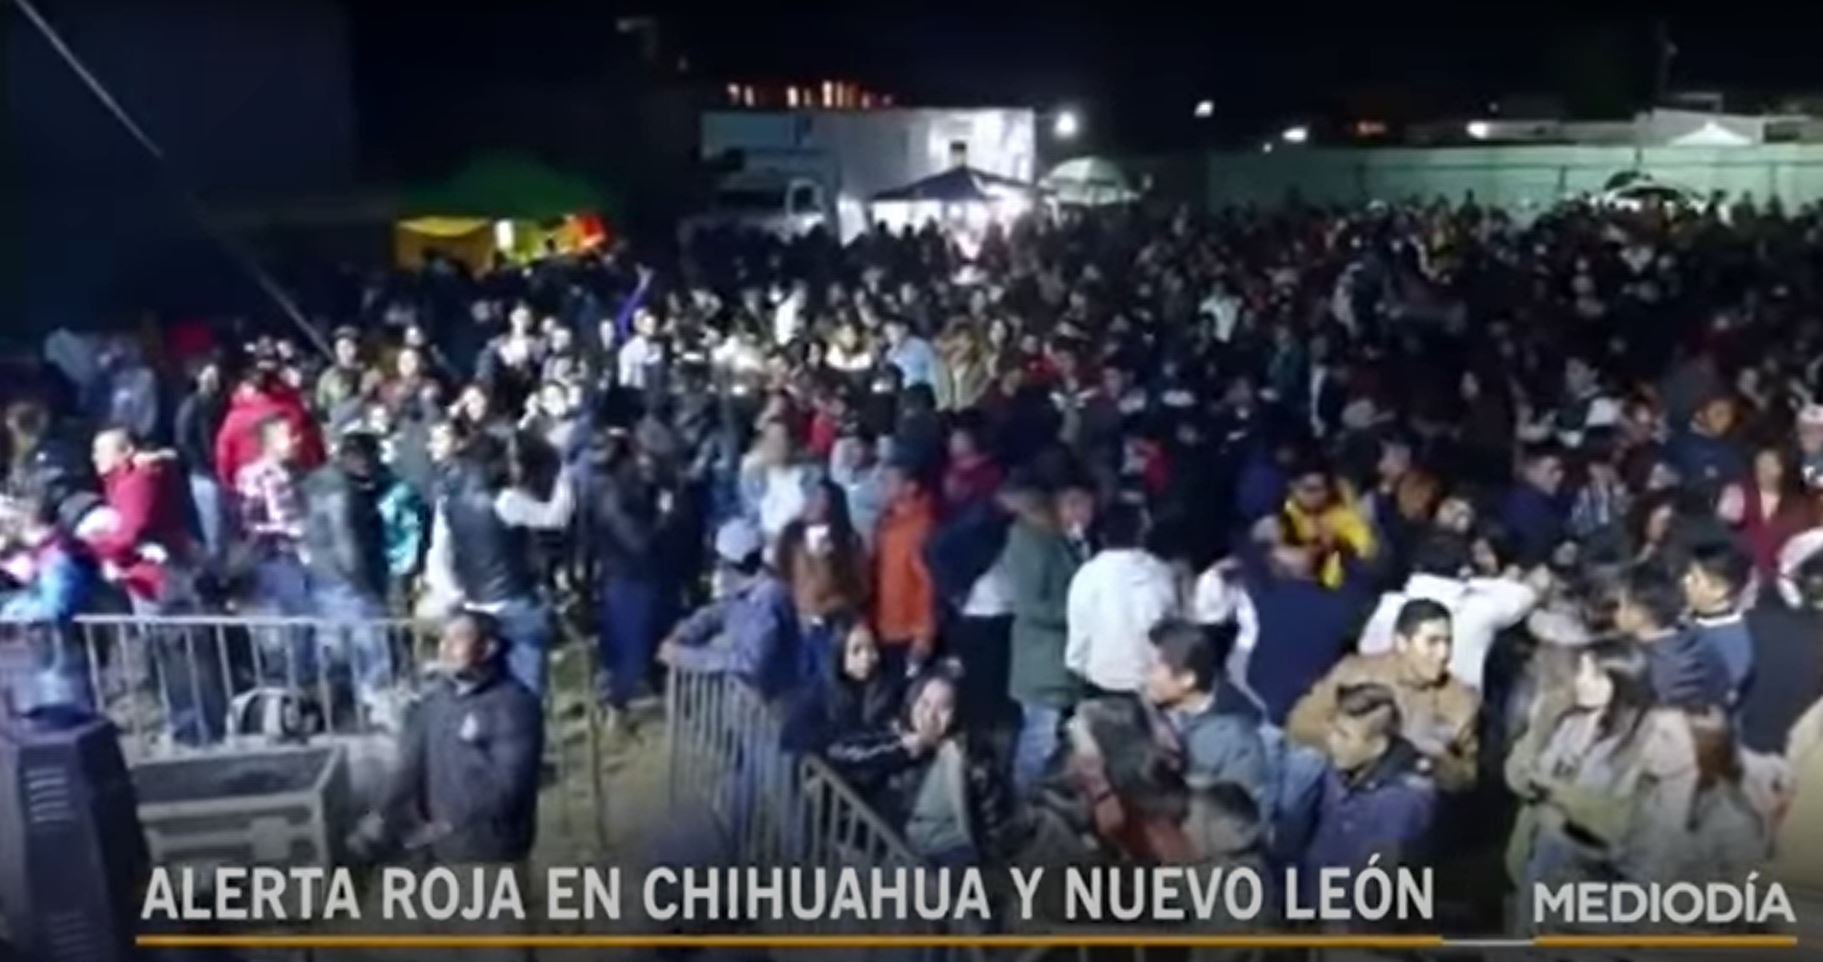 Toluca: Baile de San Andrés Cuexcontitlán se vuelve noticia internacional